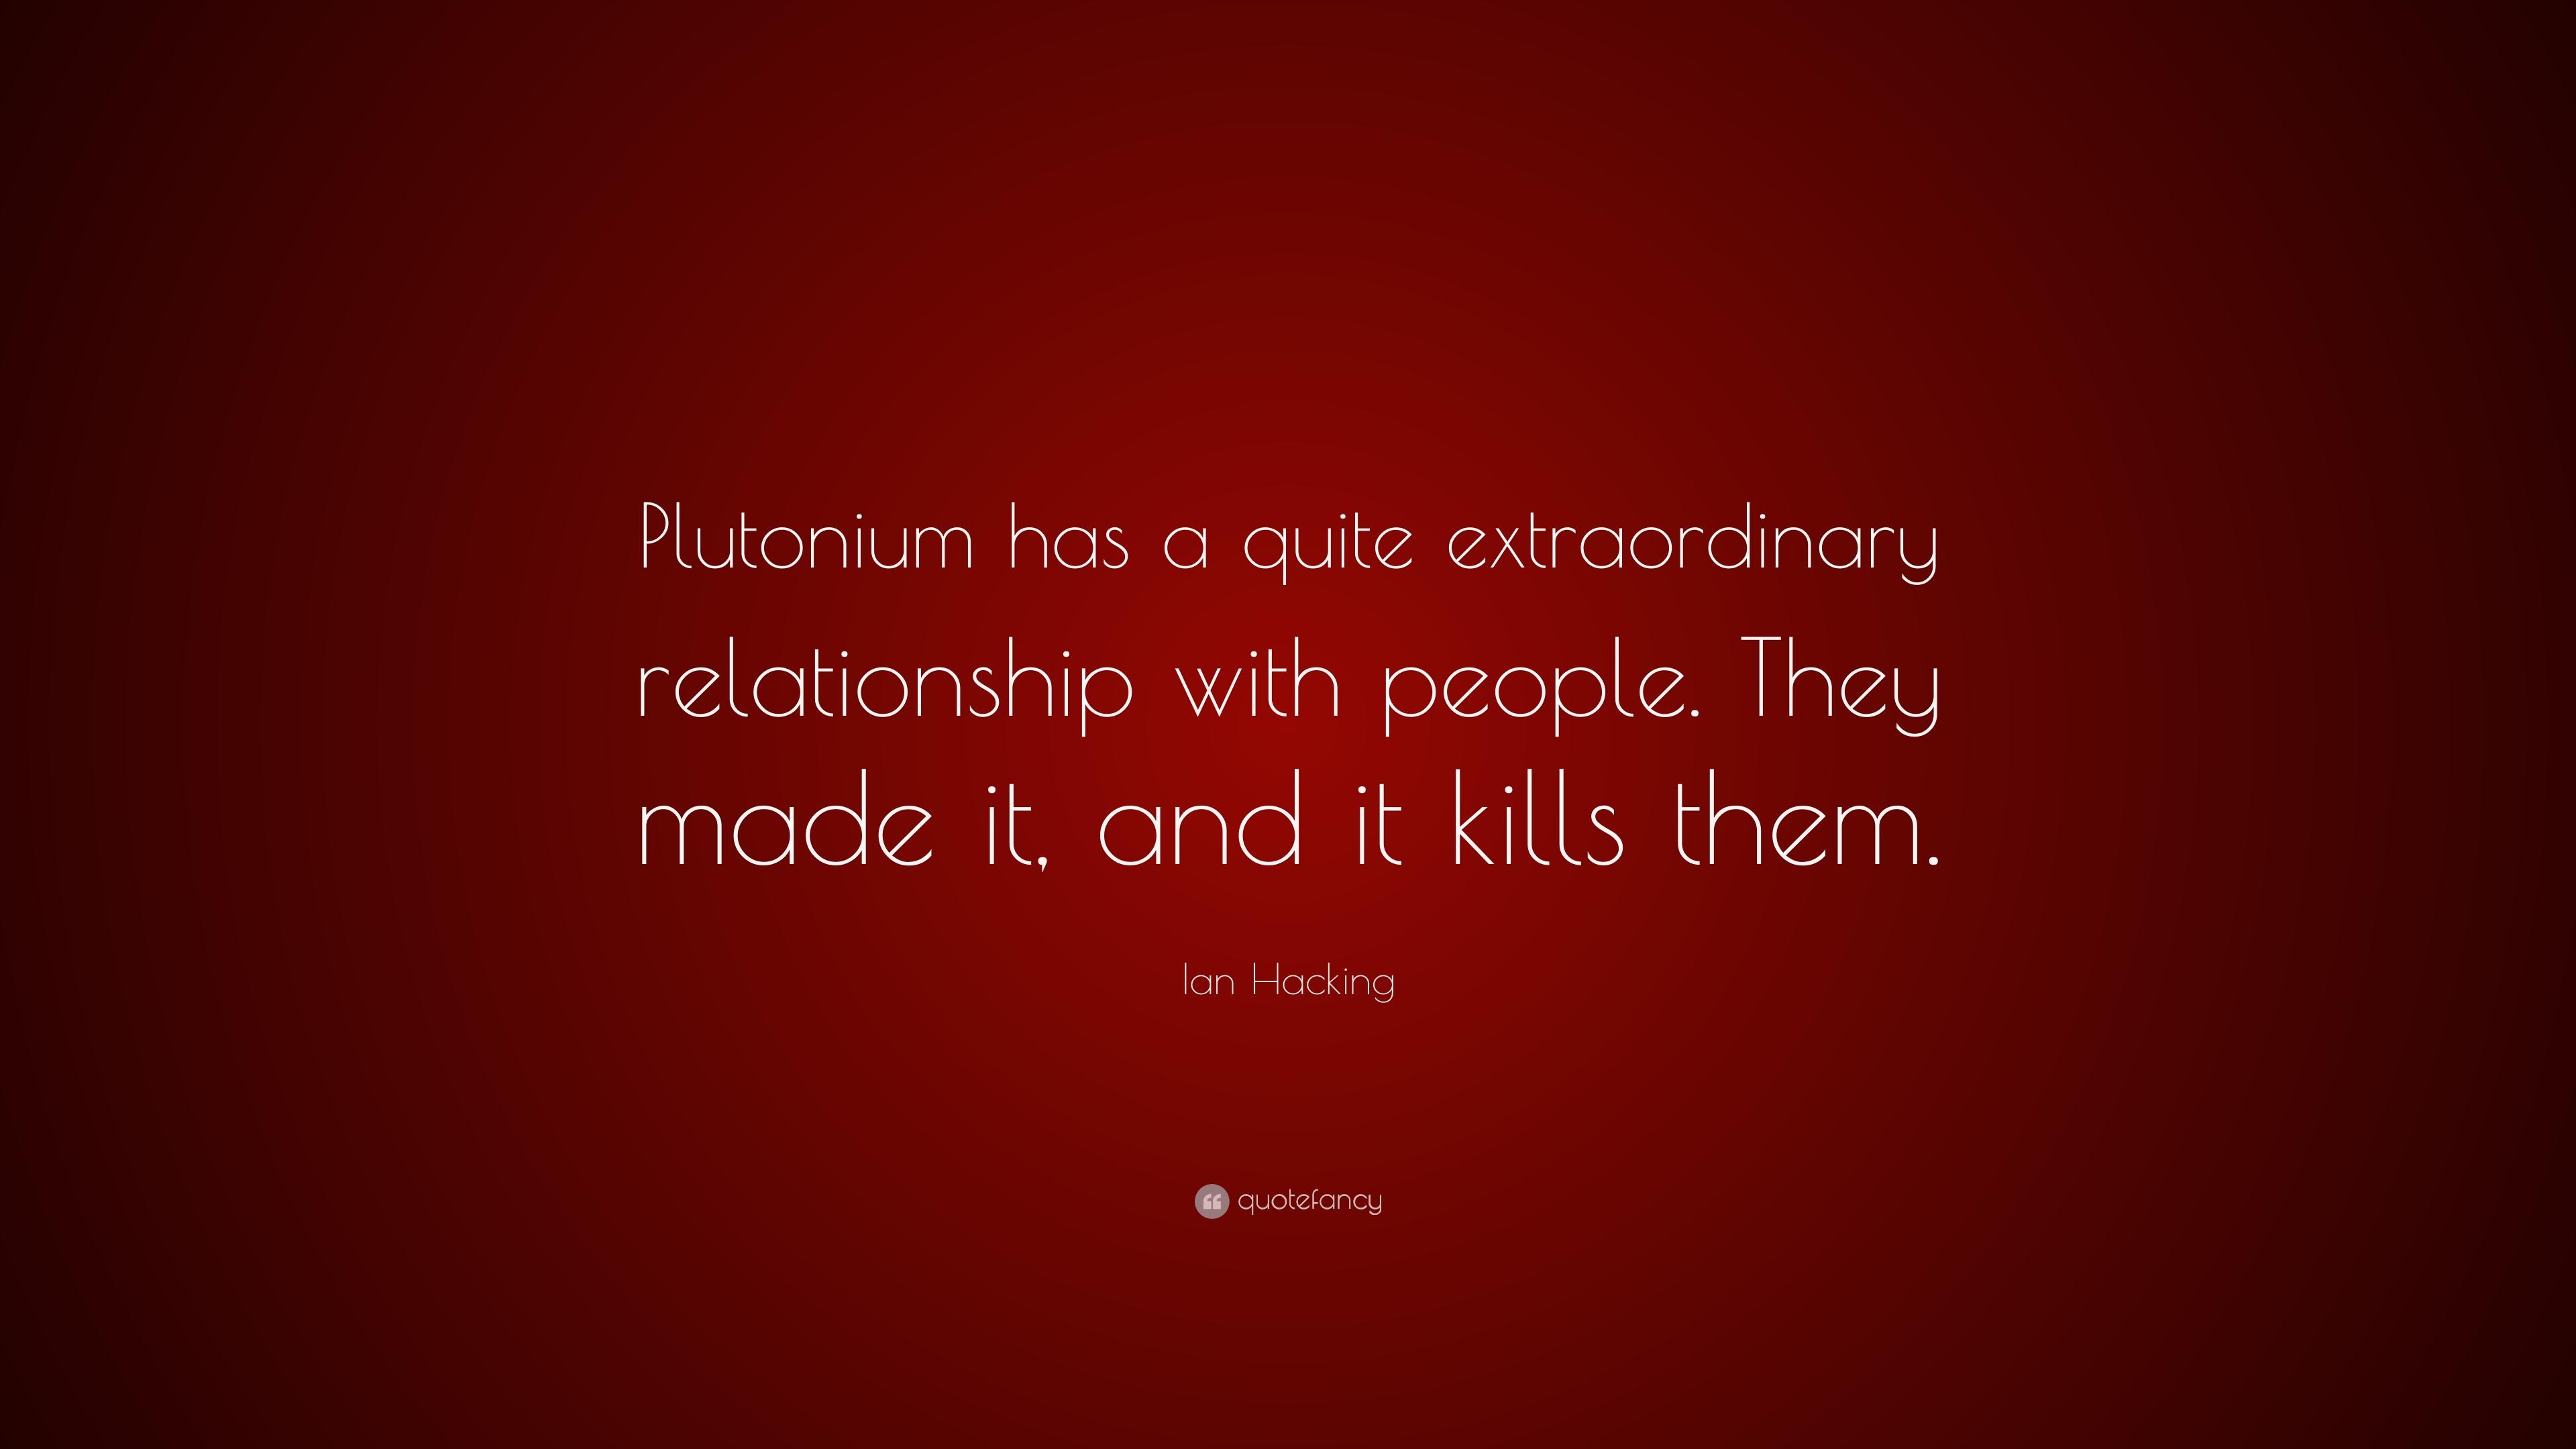 Ian Hacking Quote: “Plutonium has a quite extraordinary